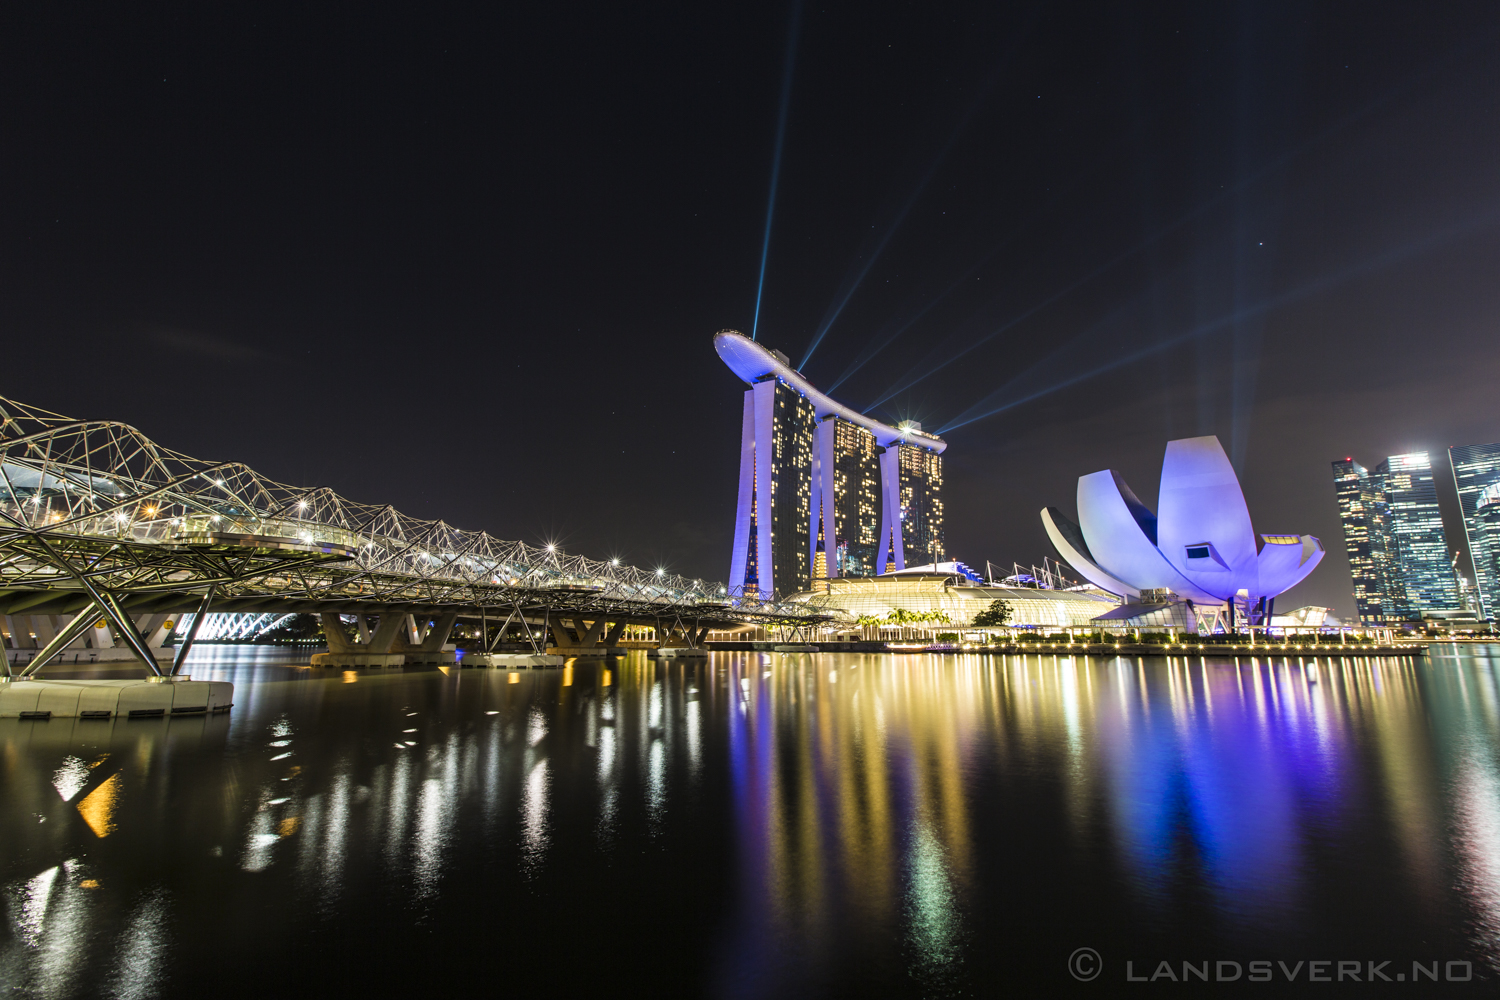 Marina Bay Sands and Helix Bridge, Singapore. 

(Canon EOS 5D Mark III / Canon EF 16-35mm f/2.8 L II USM)